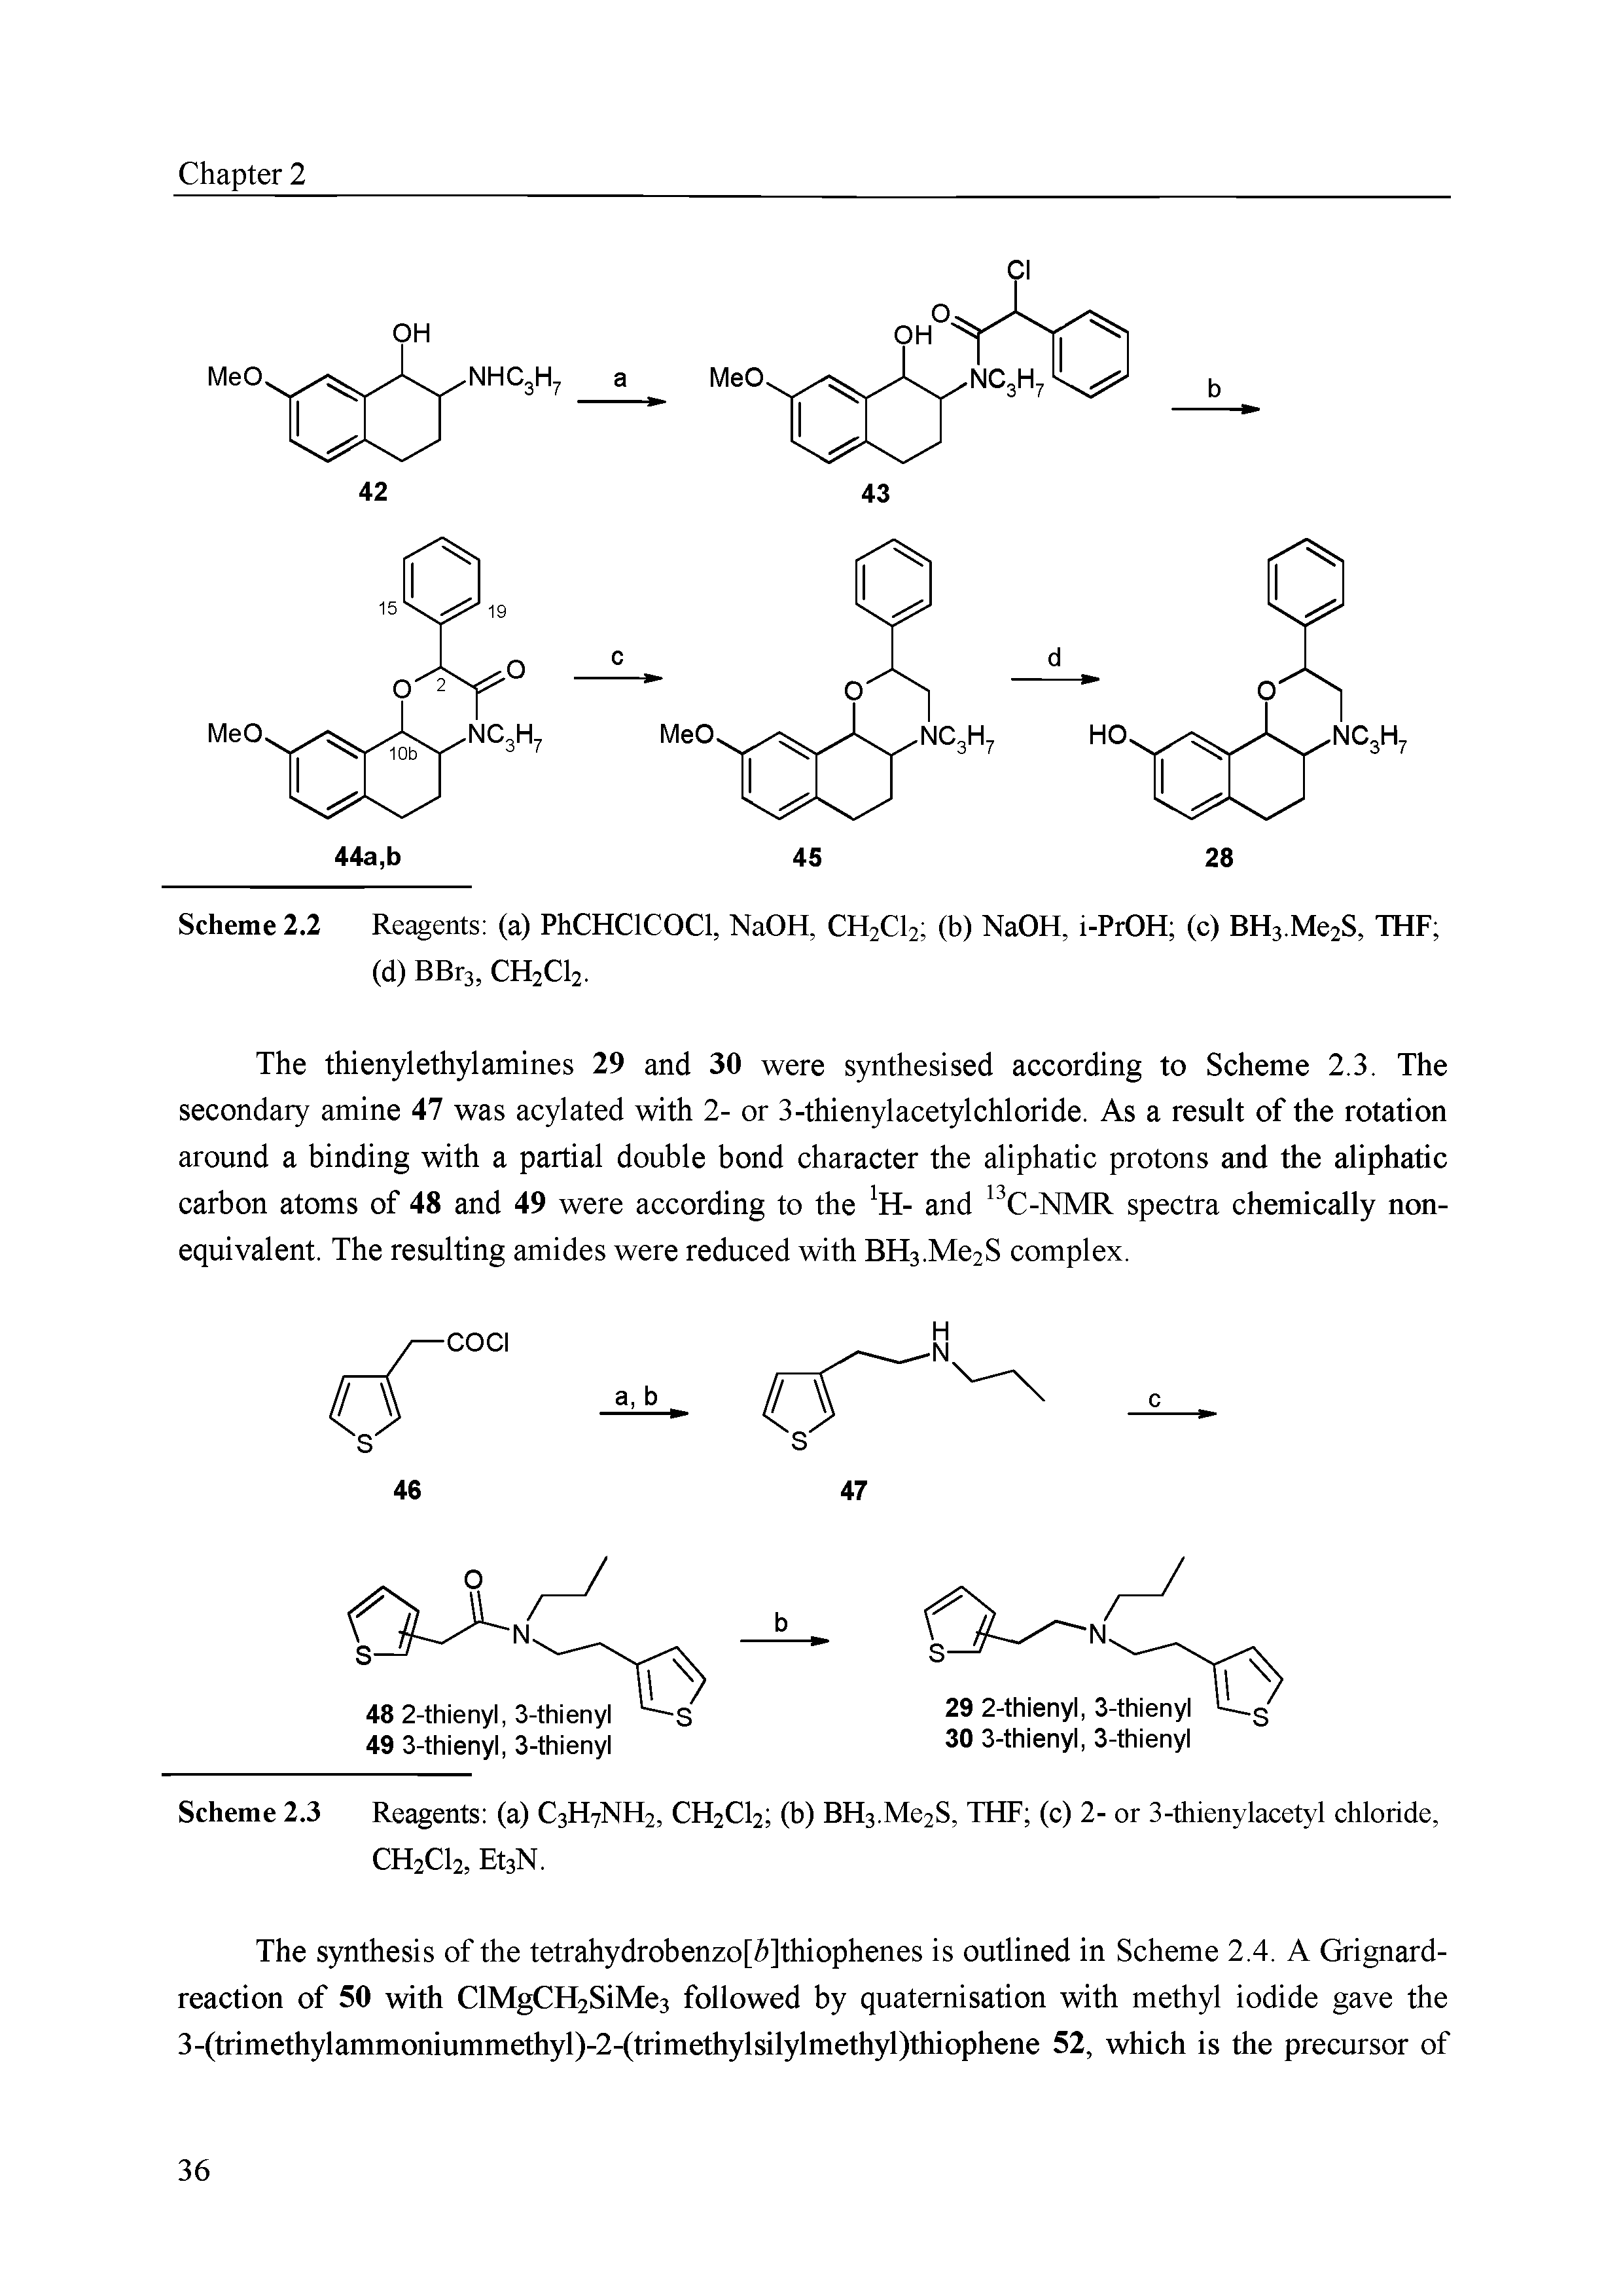 Scheme 2.3 Reagents (a) C3H7NH2, CH2C12 (b) BH3.Me2S, THF (c) 2- or 3-thienylacetyl chloride, CH2C12, Et3N.